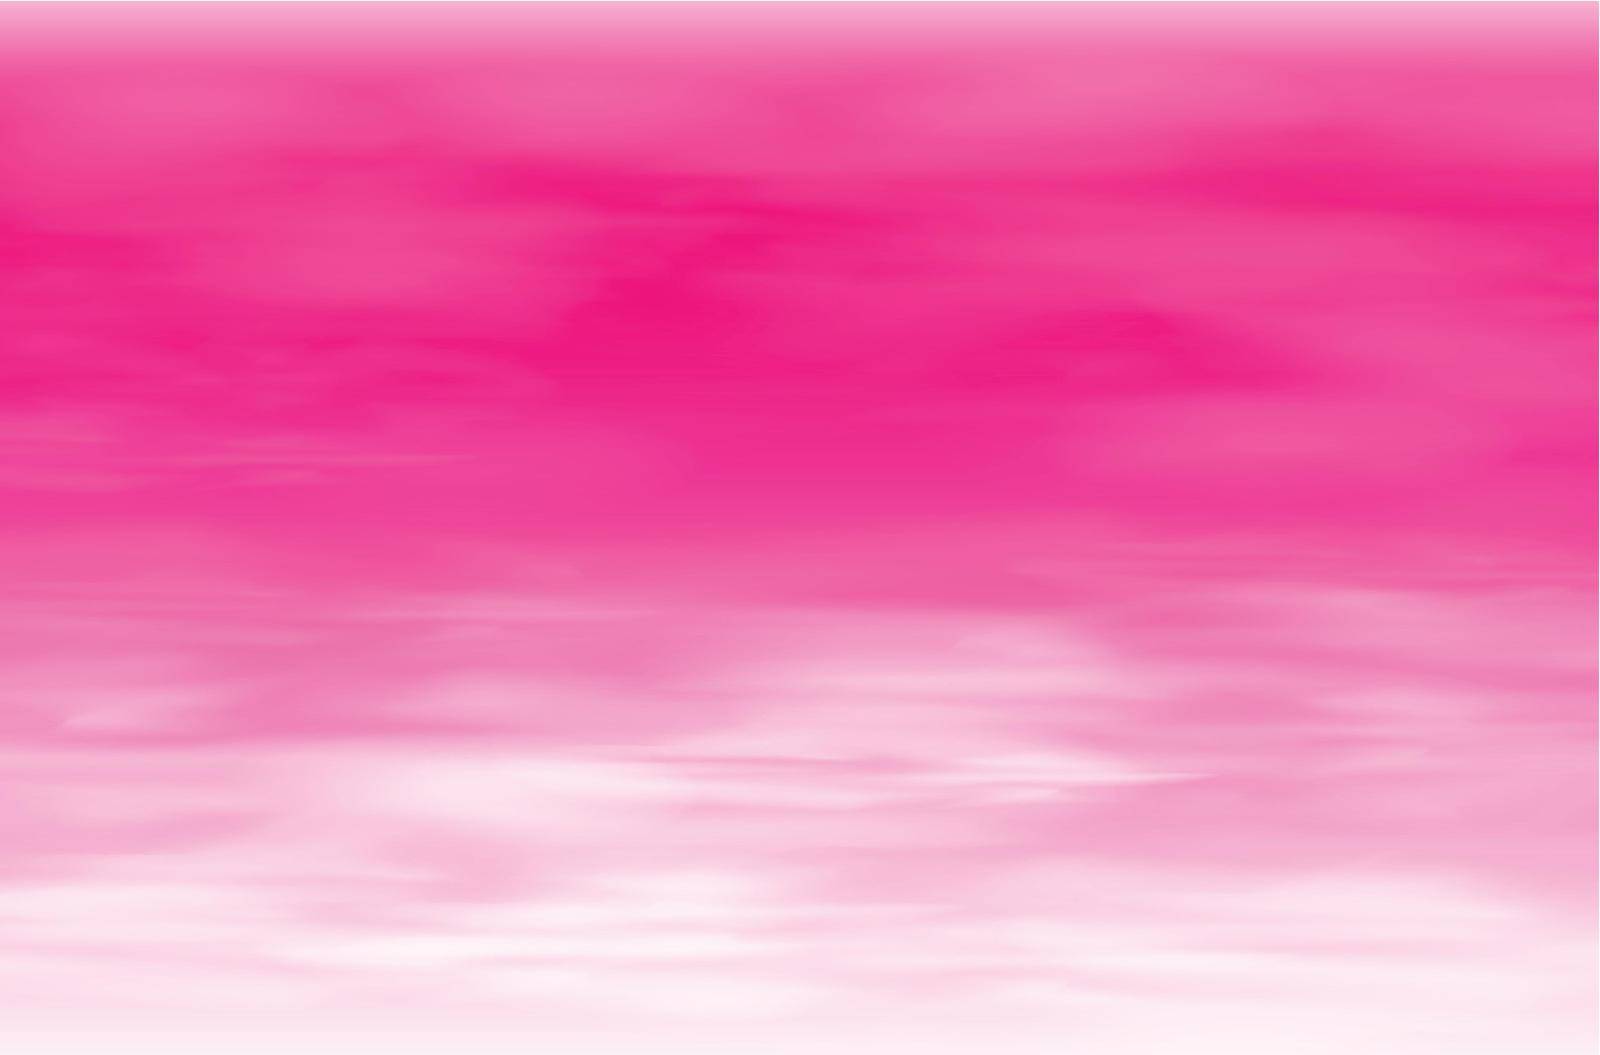 Illustration of a pink background